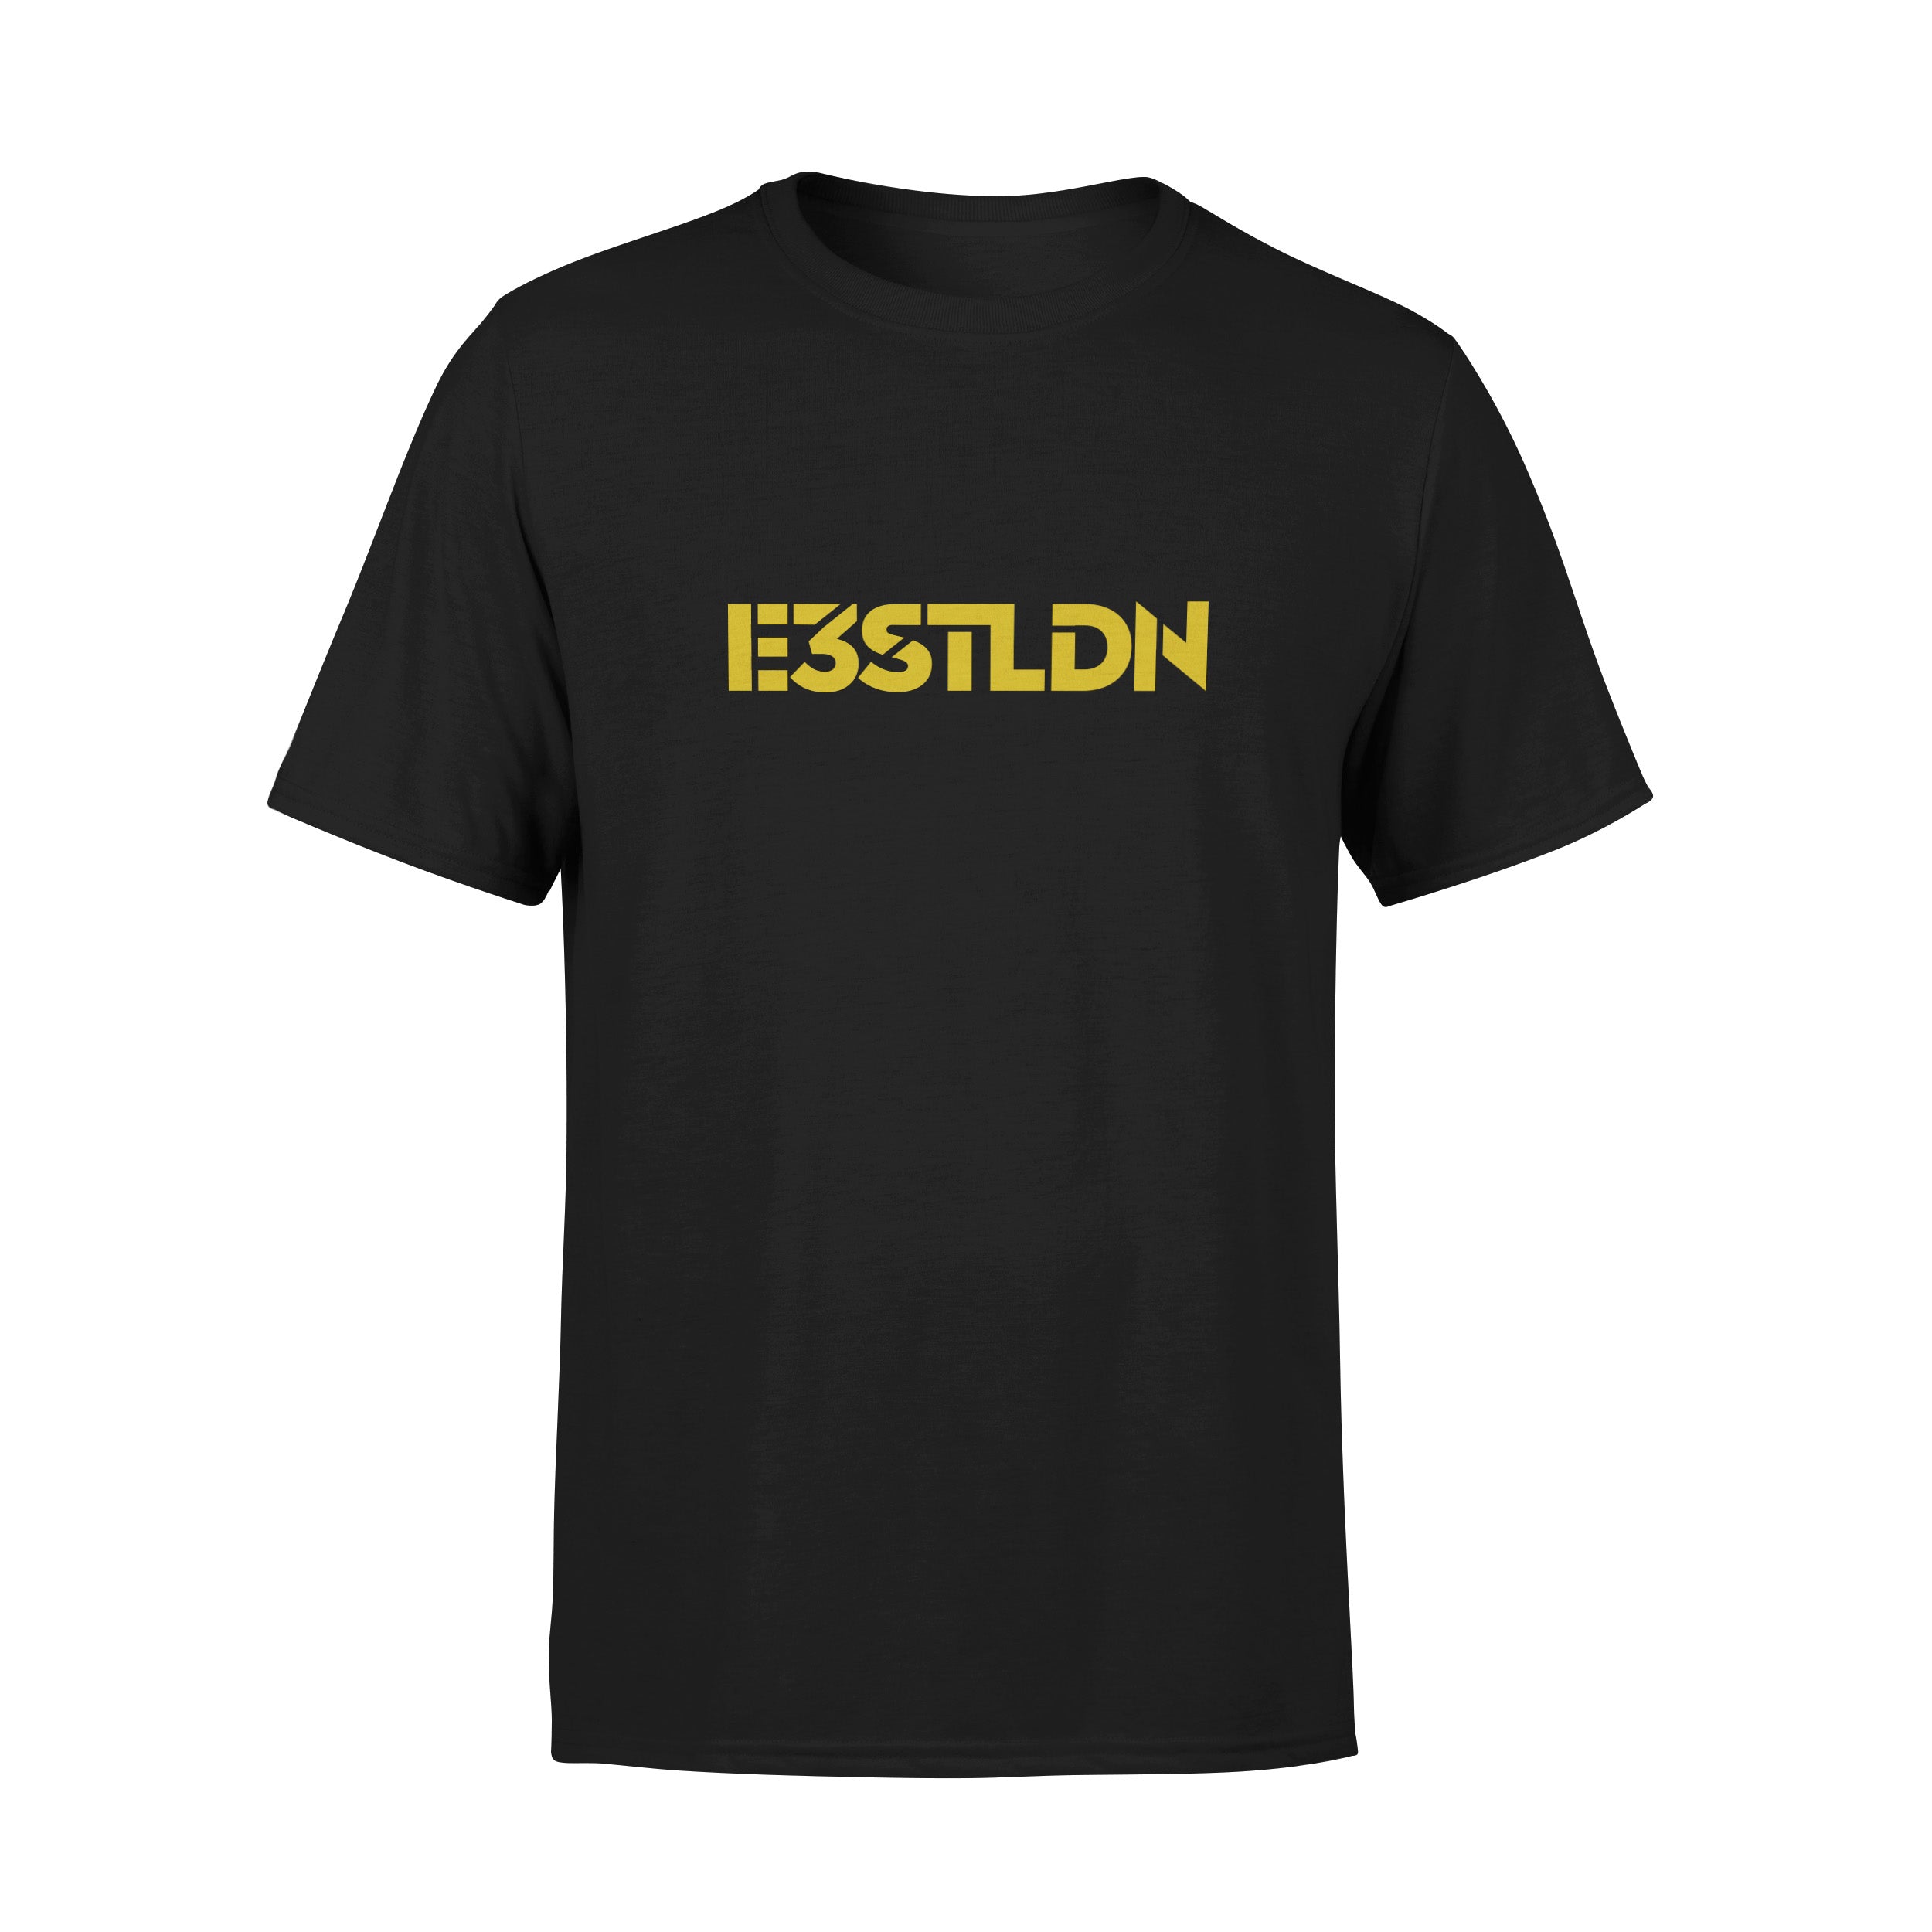 E3STLDN Gold T-shirt